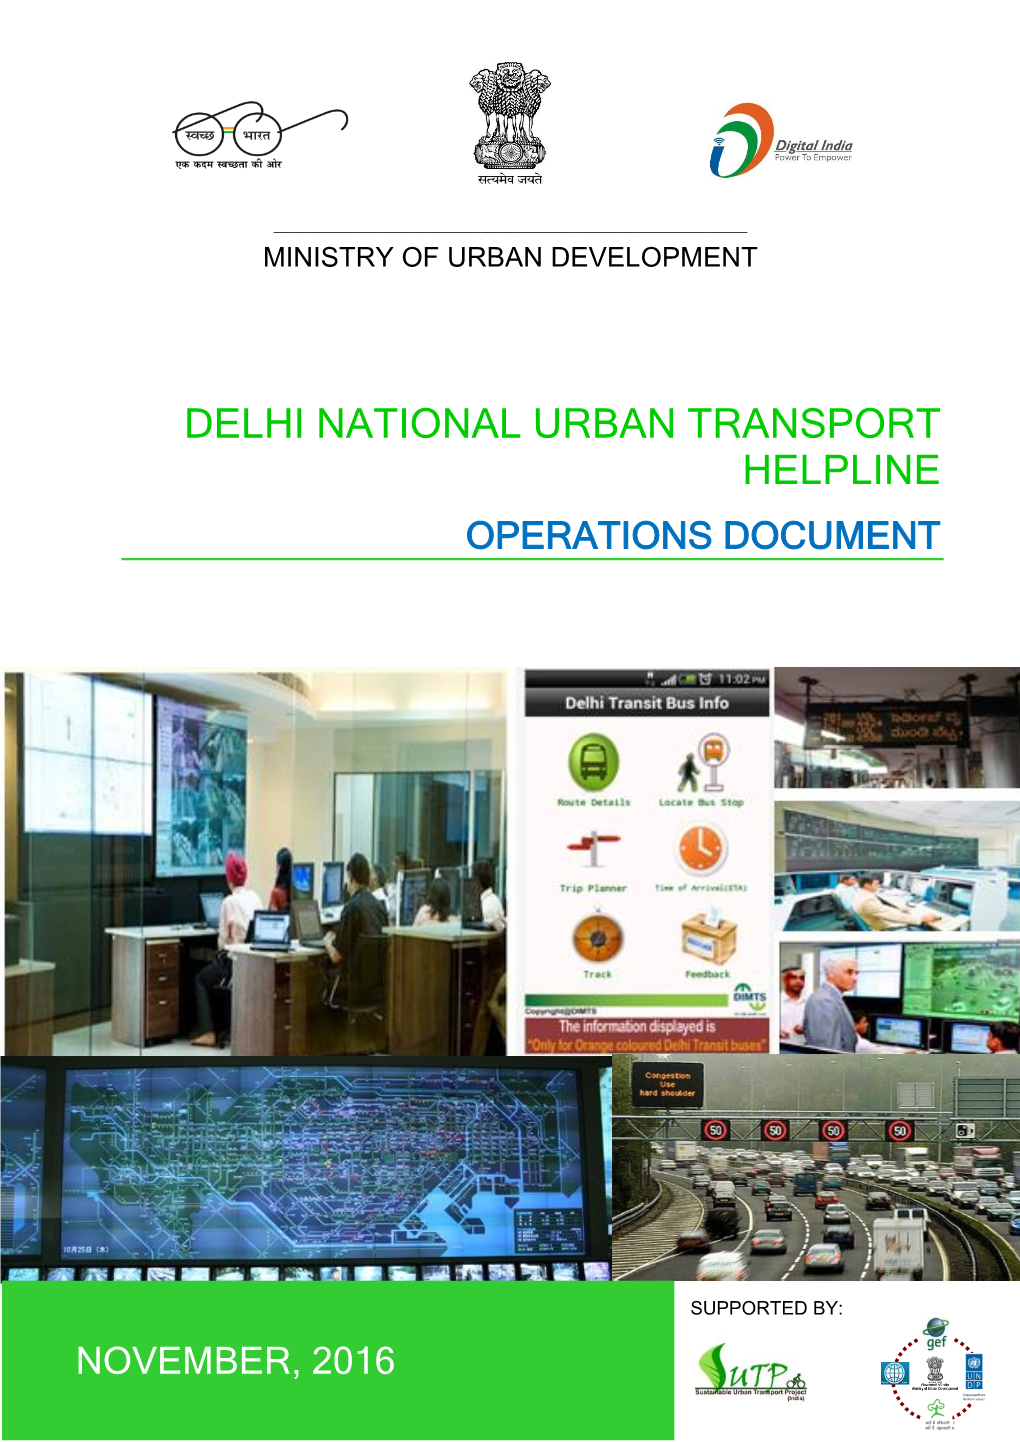 Delhi National Urban Transport Helpline Operations Document